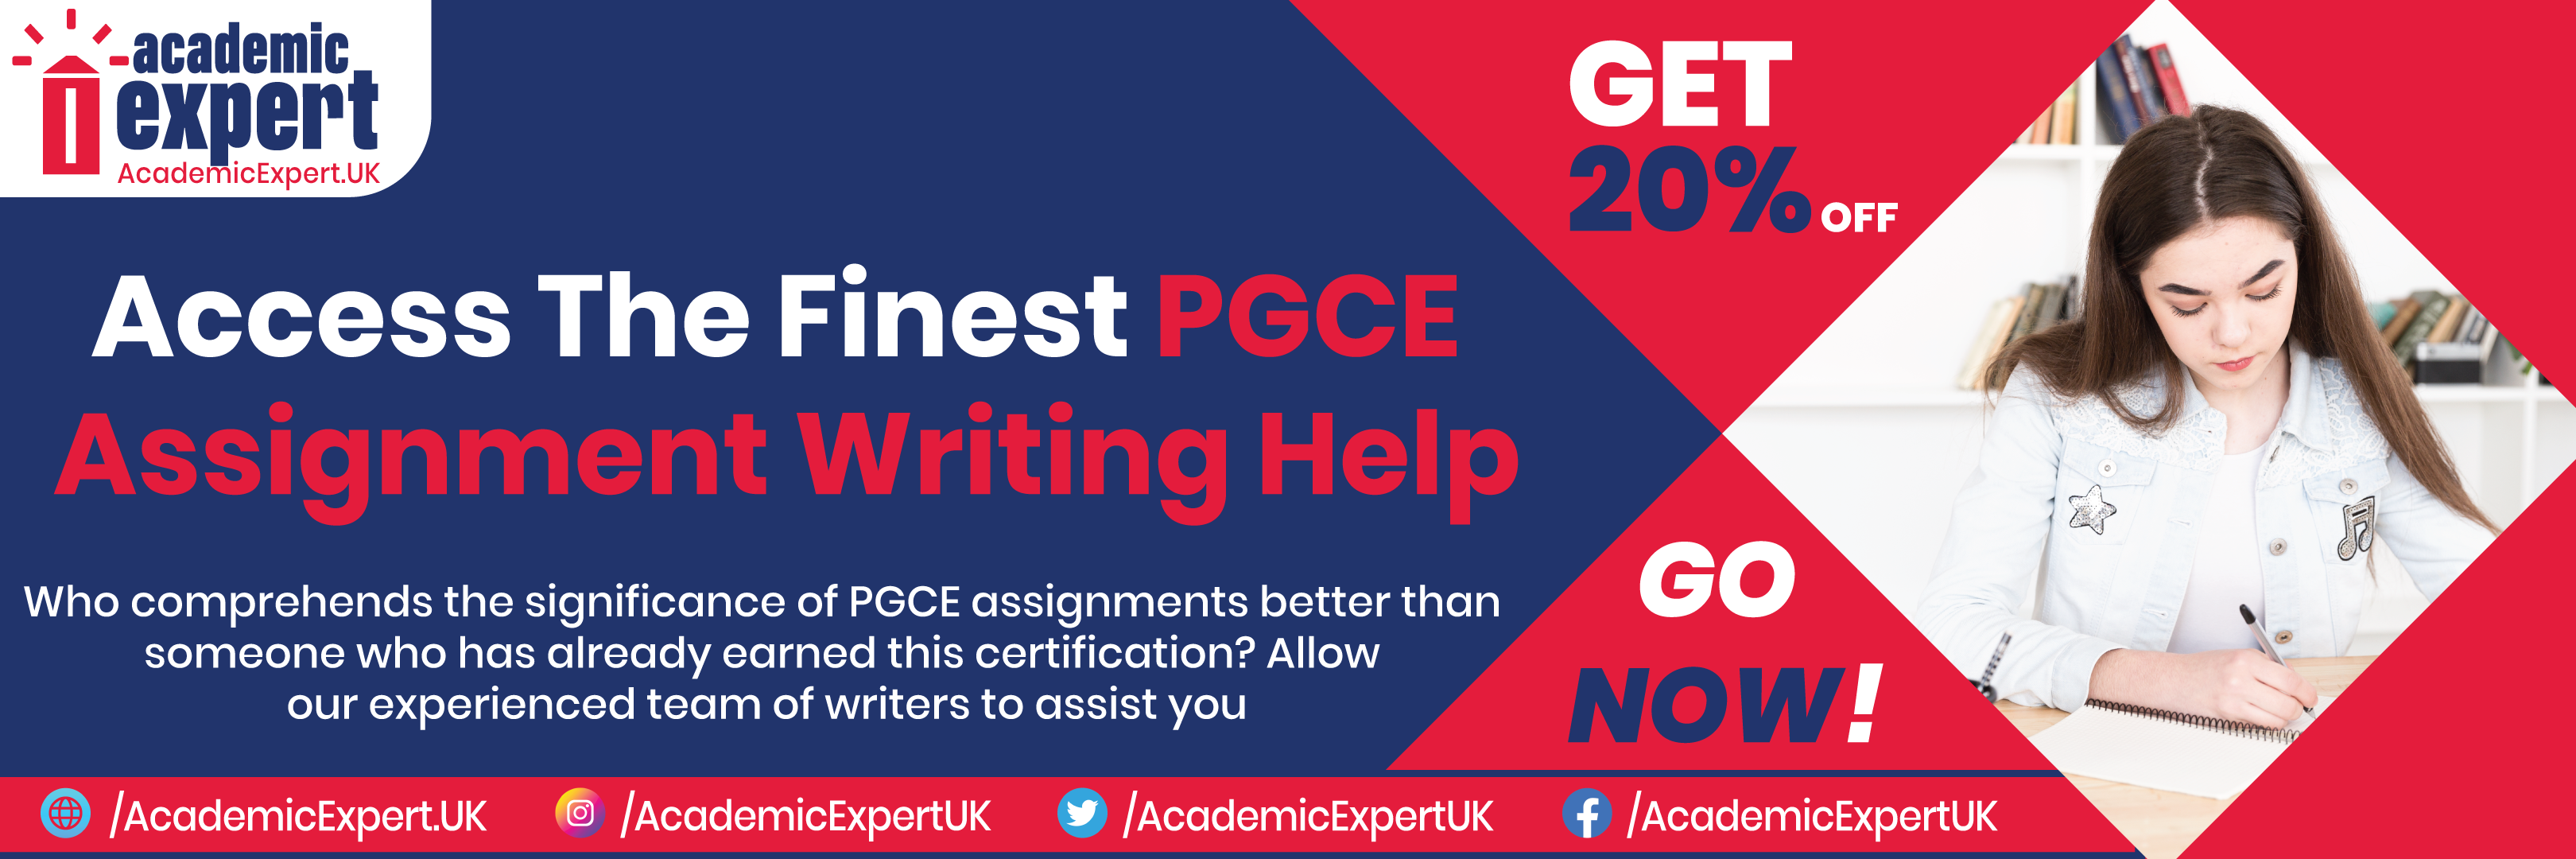 Access The Finest PGCE Assignment Writing Help